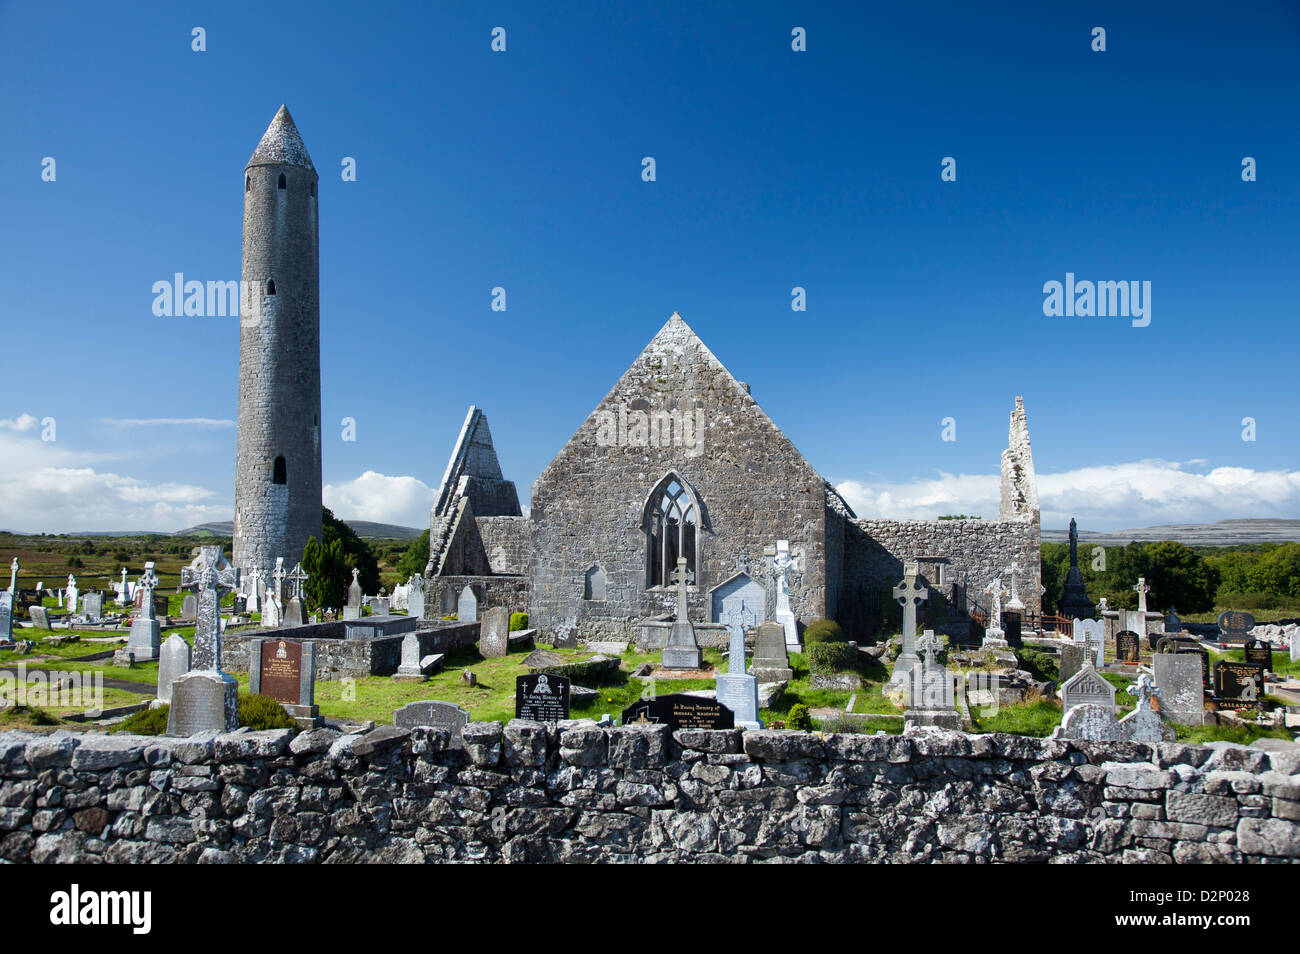 Kilmacduagh Monastery und runder Turm, County Galway, Irland. Stockfoto